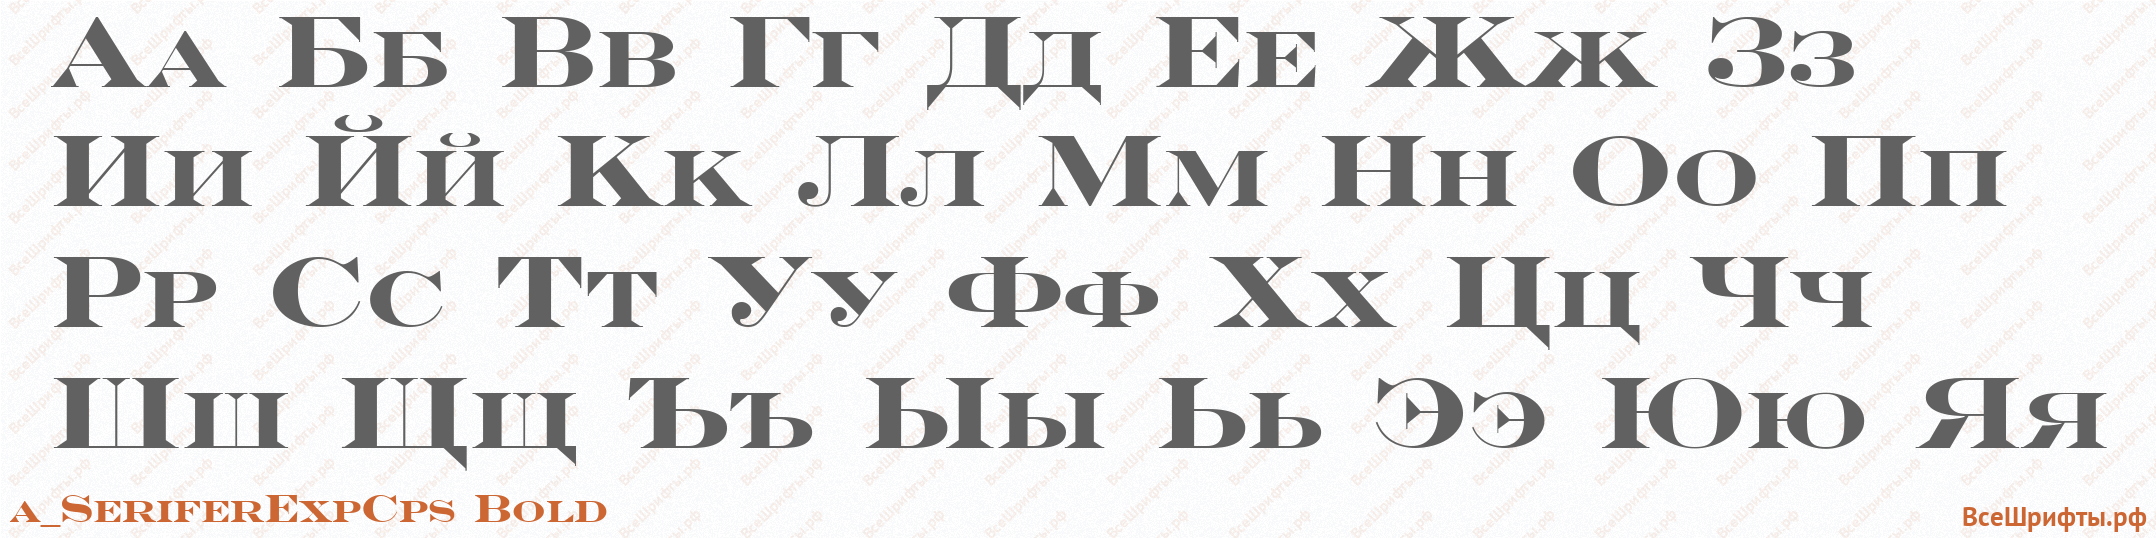 Шрифт a_SeriferExpCps Bold с русскими буквами